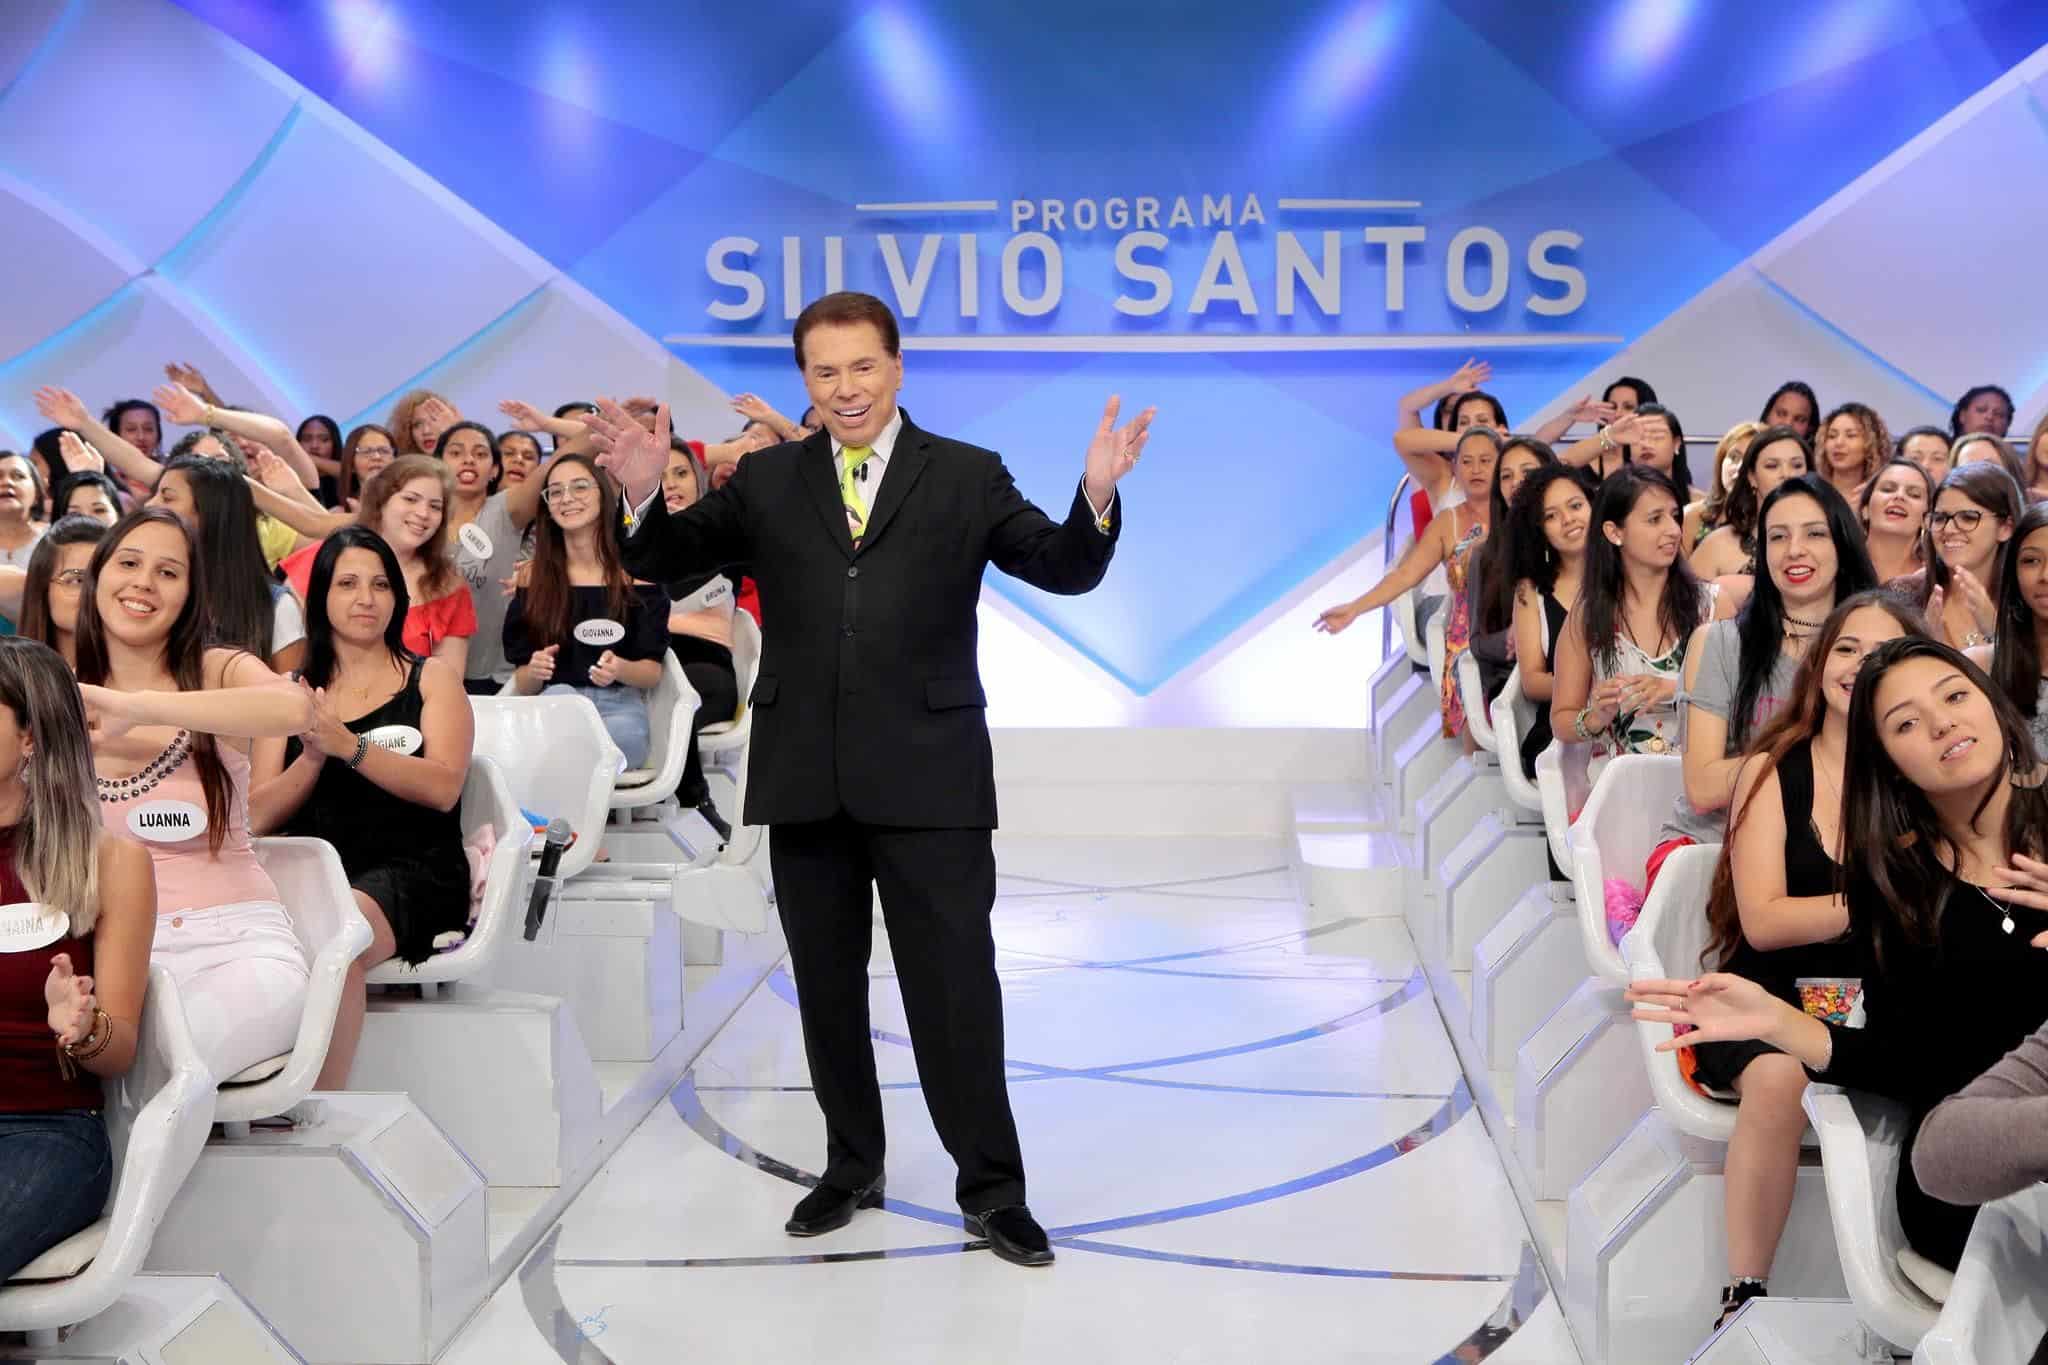 Silvio Santos avalia 2017 e se diz otimista: “O Brasil já está levantando o voo”